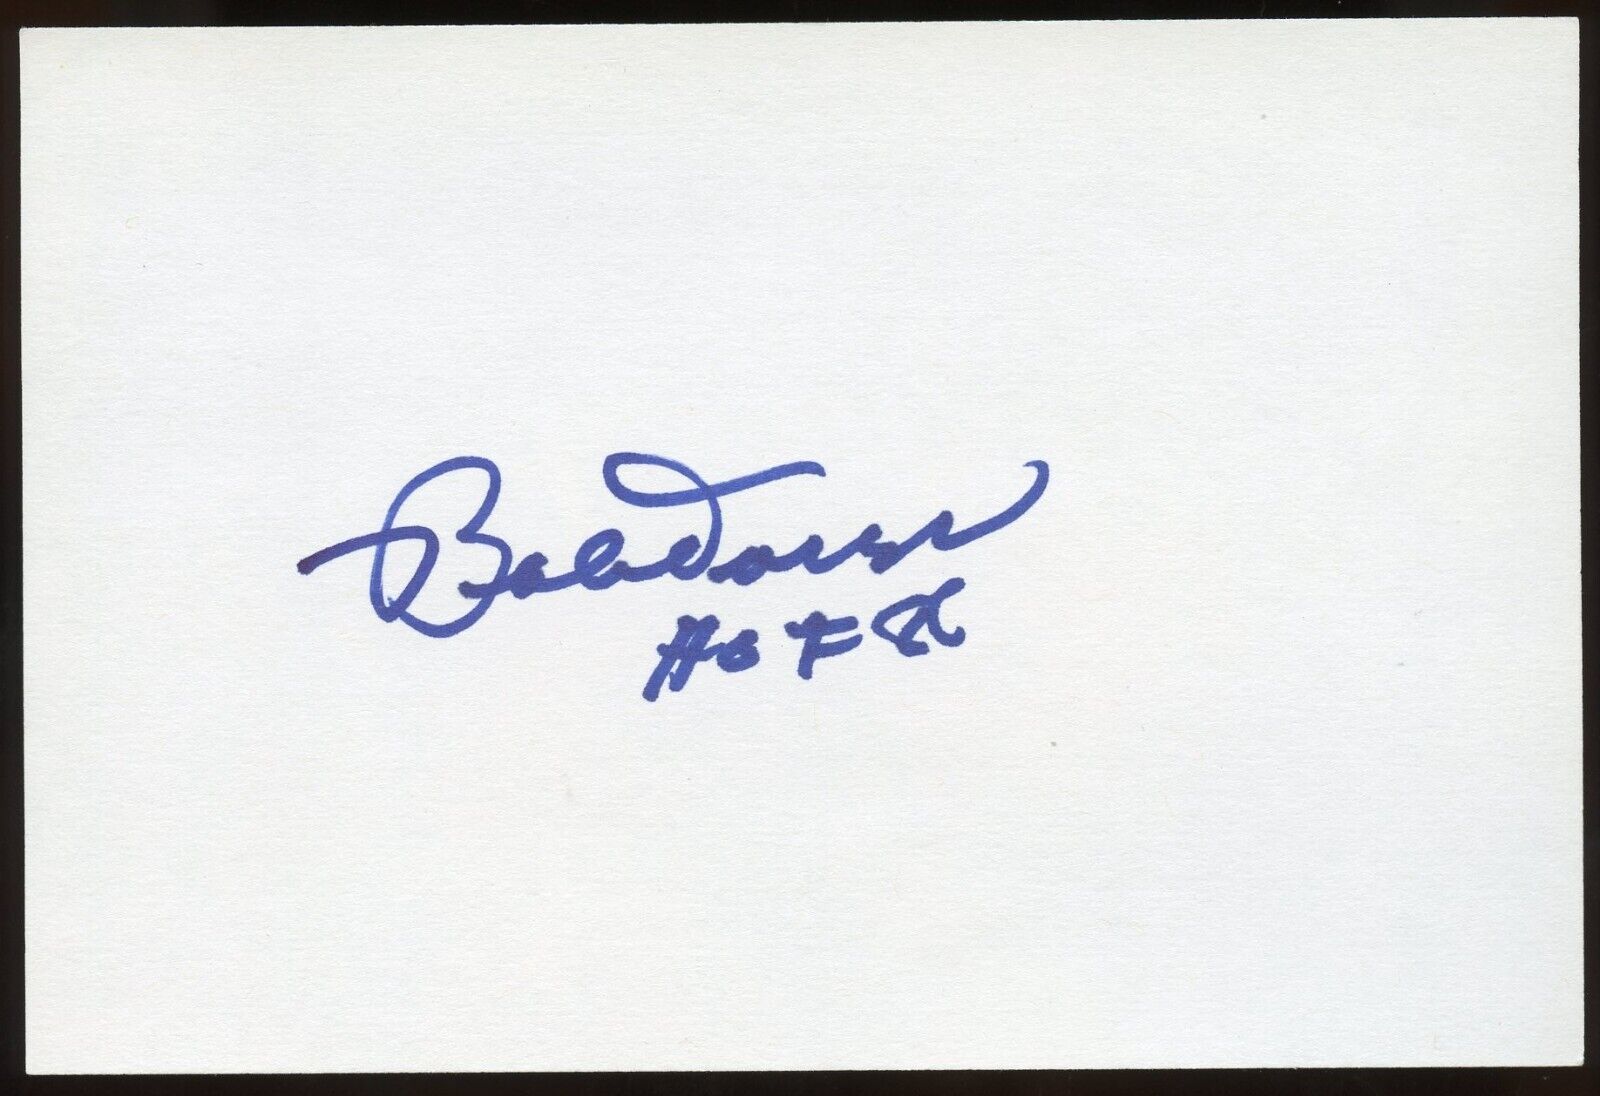 Bobby Doerr d2017 signed autograph auto 4x6 cut Baseball Player & Coach HOF